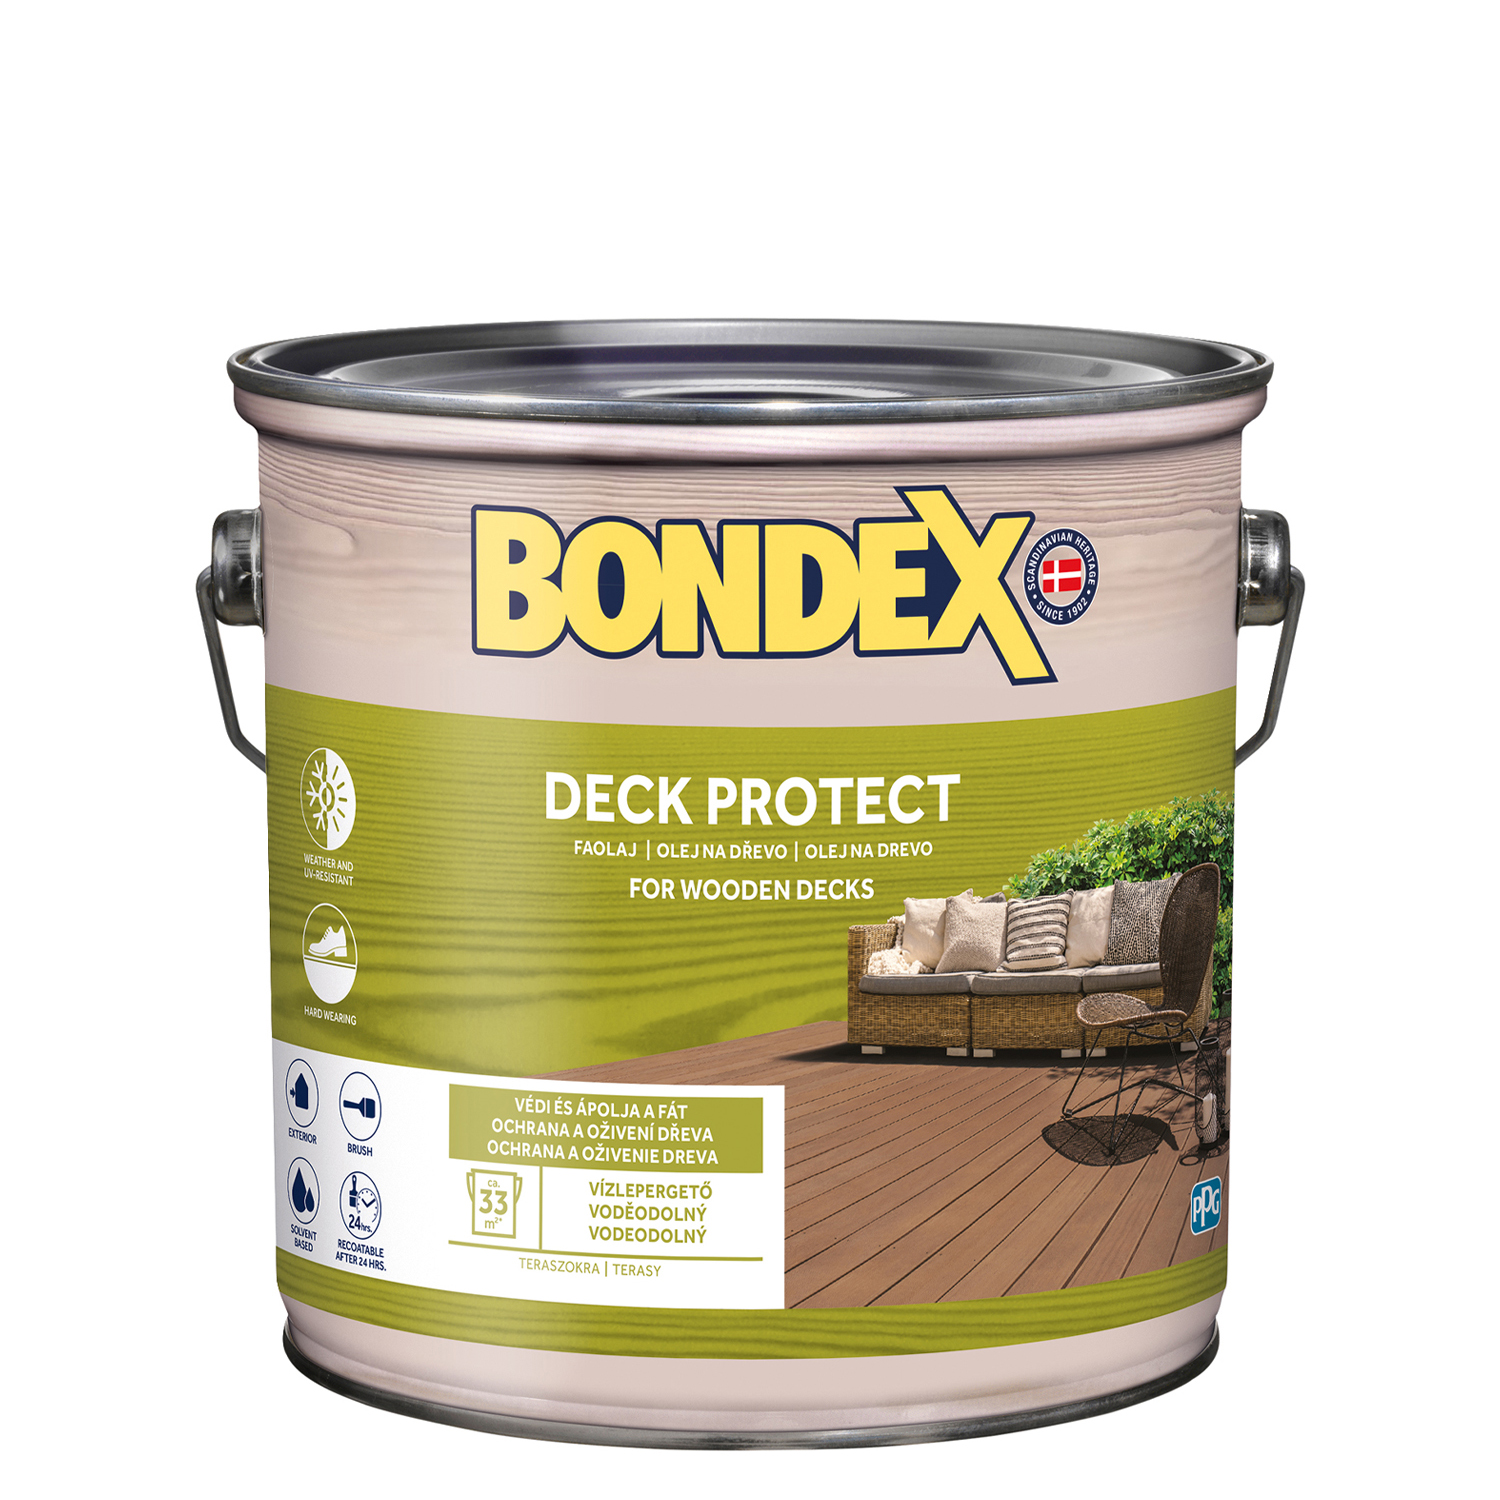 Bondex Deck Protect Nut brown,2.5L